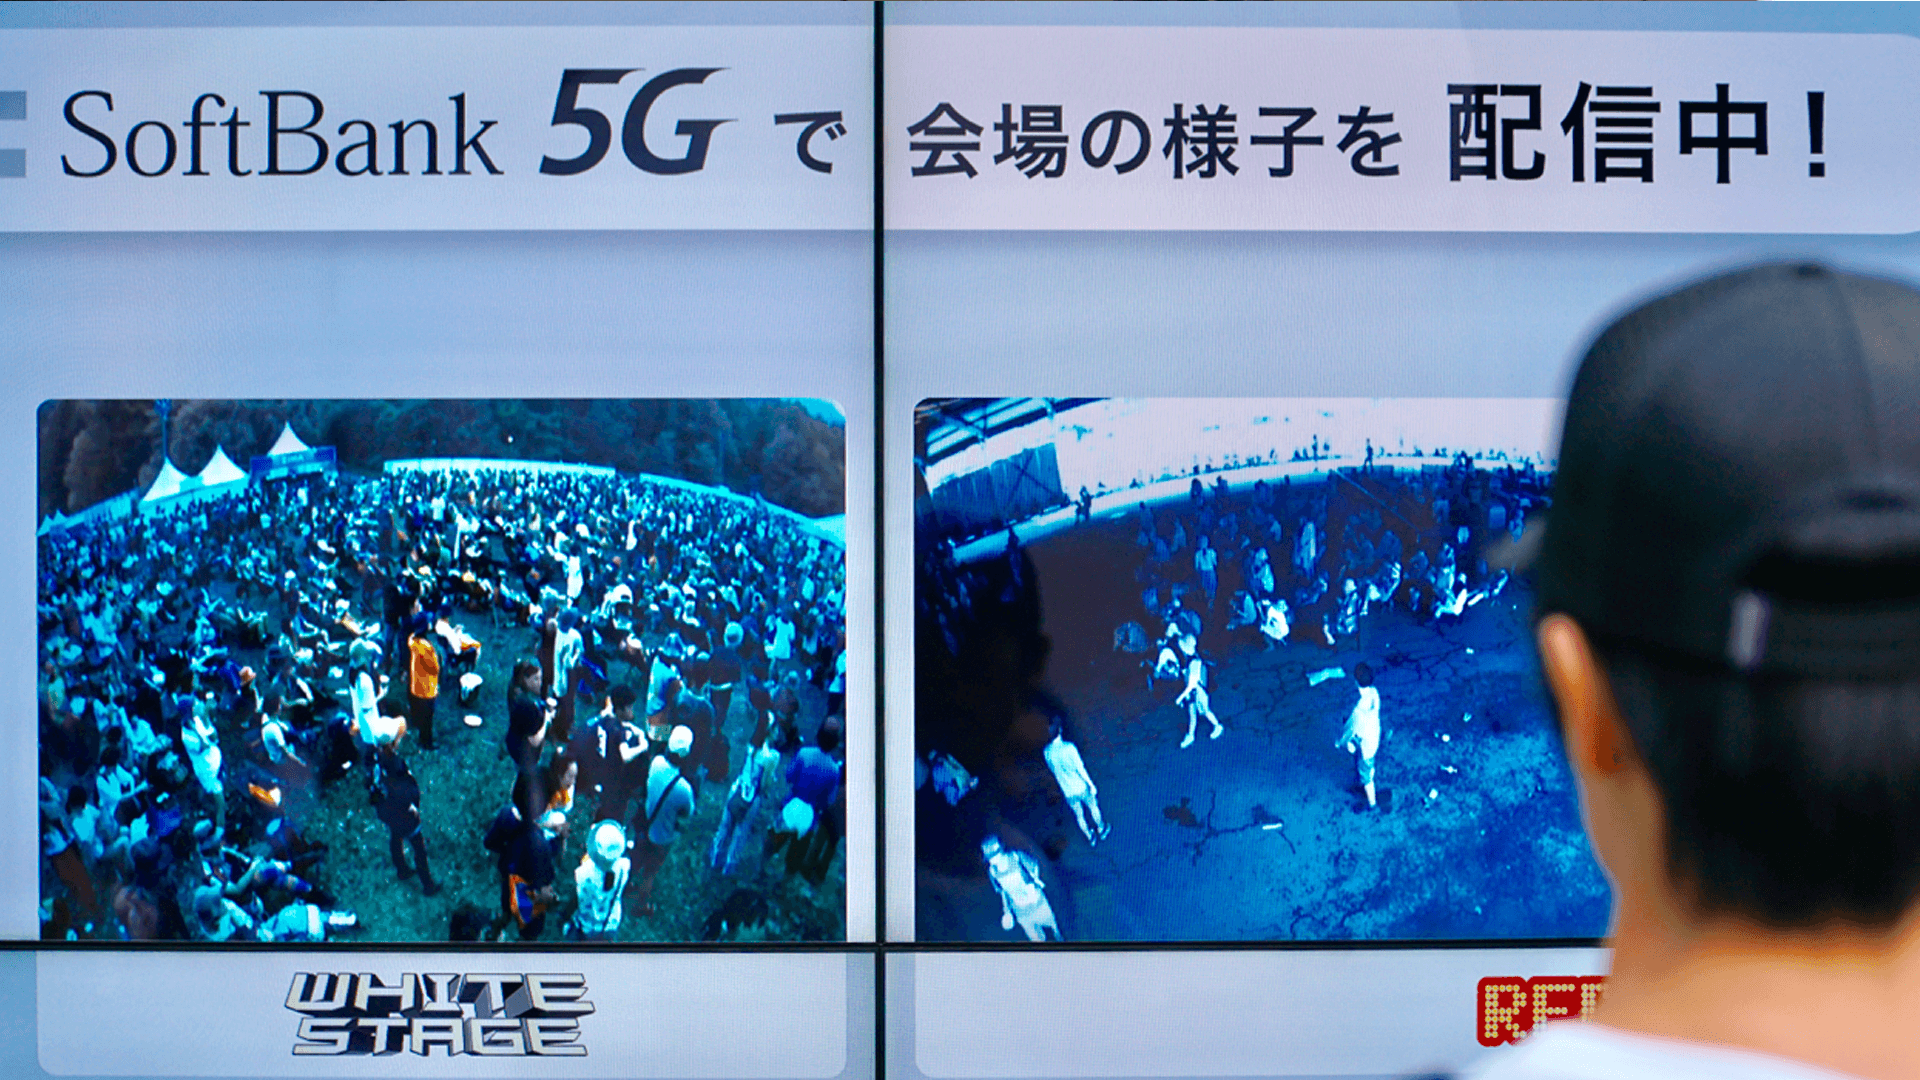 FUJI ROCK `19 EXPerience by SoftBank 5G's image